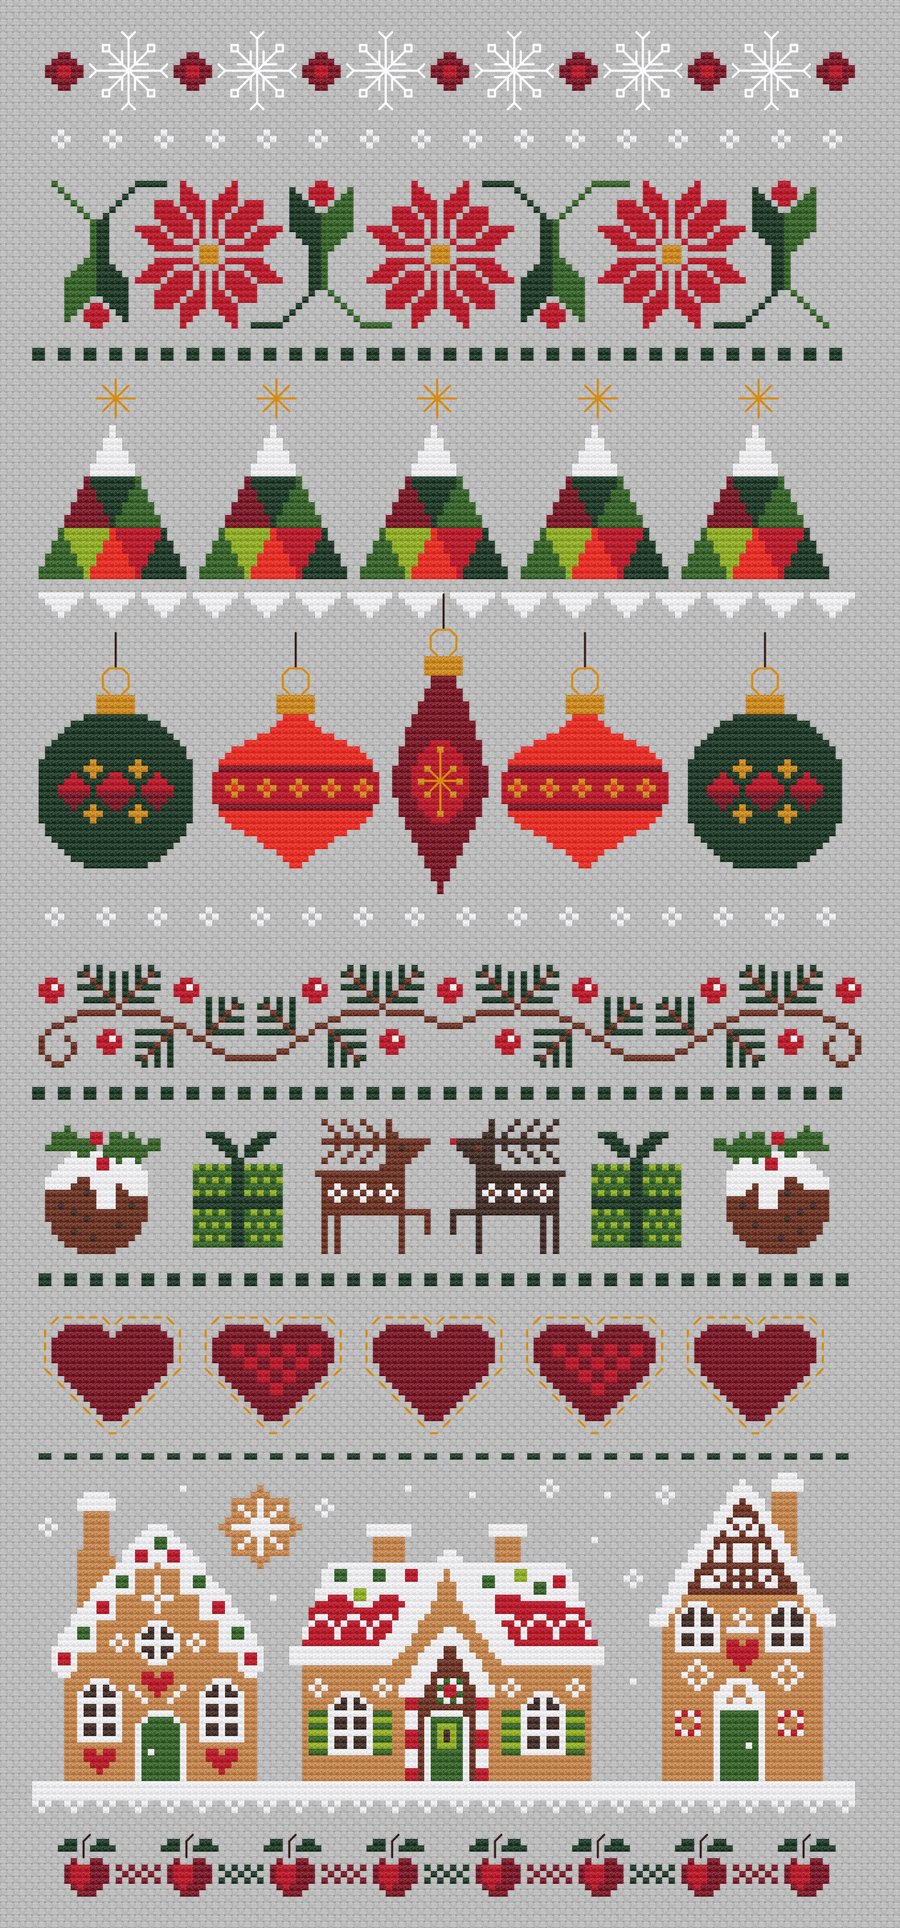 211 Cross Stitch Christmas Gingerbread houses Sampler - Scandinavian style